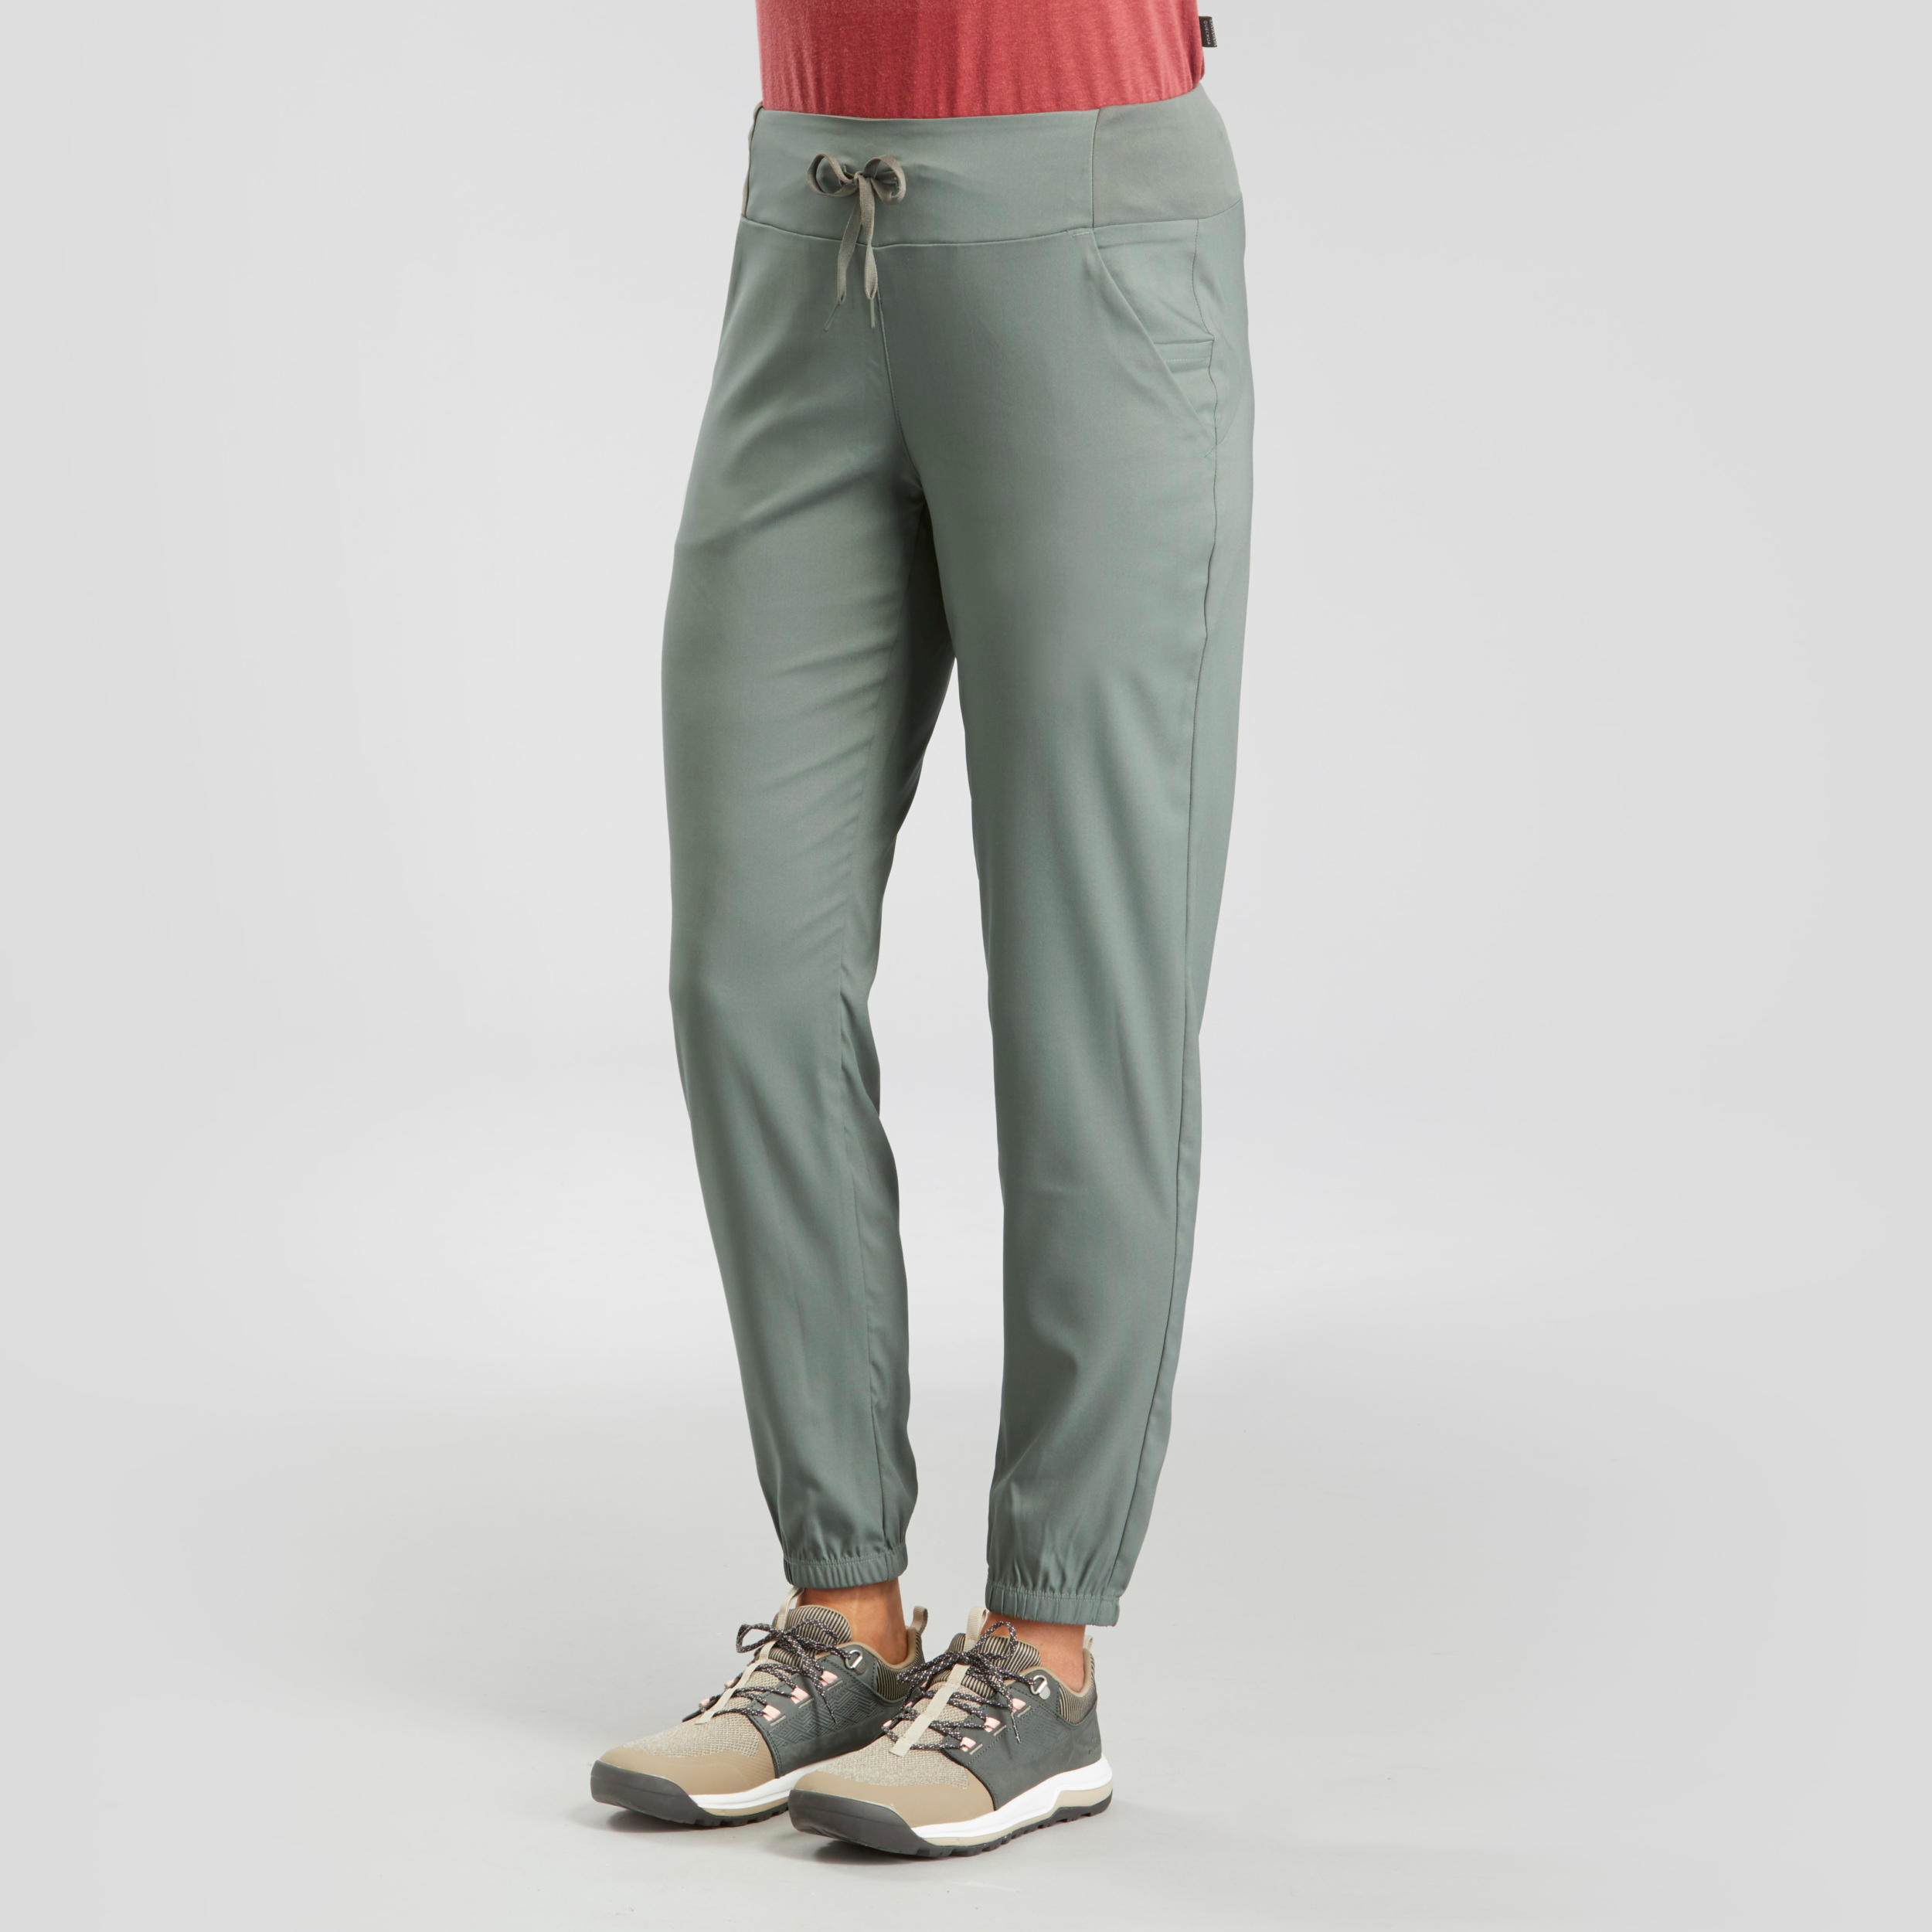 Kvswiu Womens Capri Jogger Pants Workout Running Cropped Sweatpants with  Pockets Blue XXL price in UAE  Amazon UAE  kanbkam